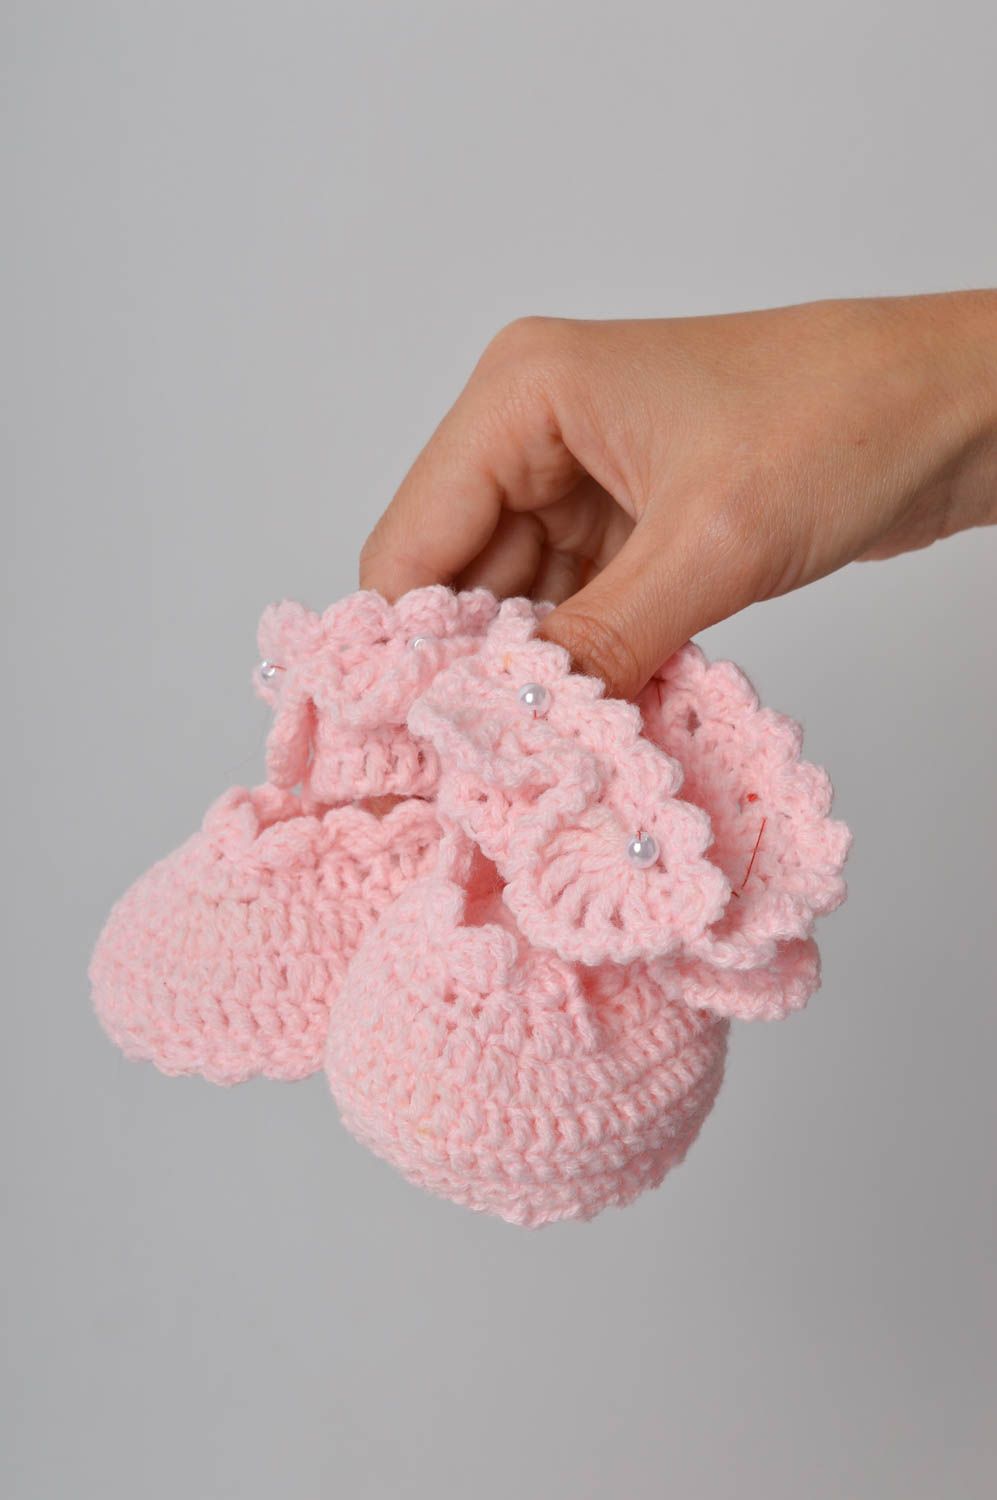 Crocheted booties for babies knitted socks crochet booties handmade booties photo 5